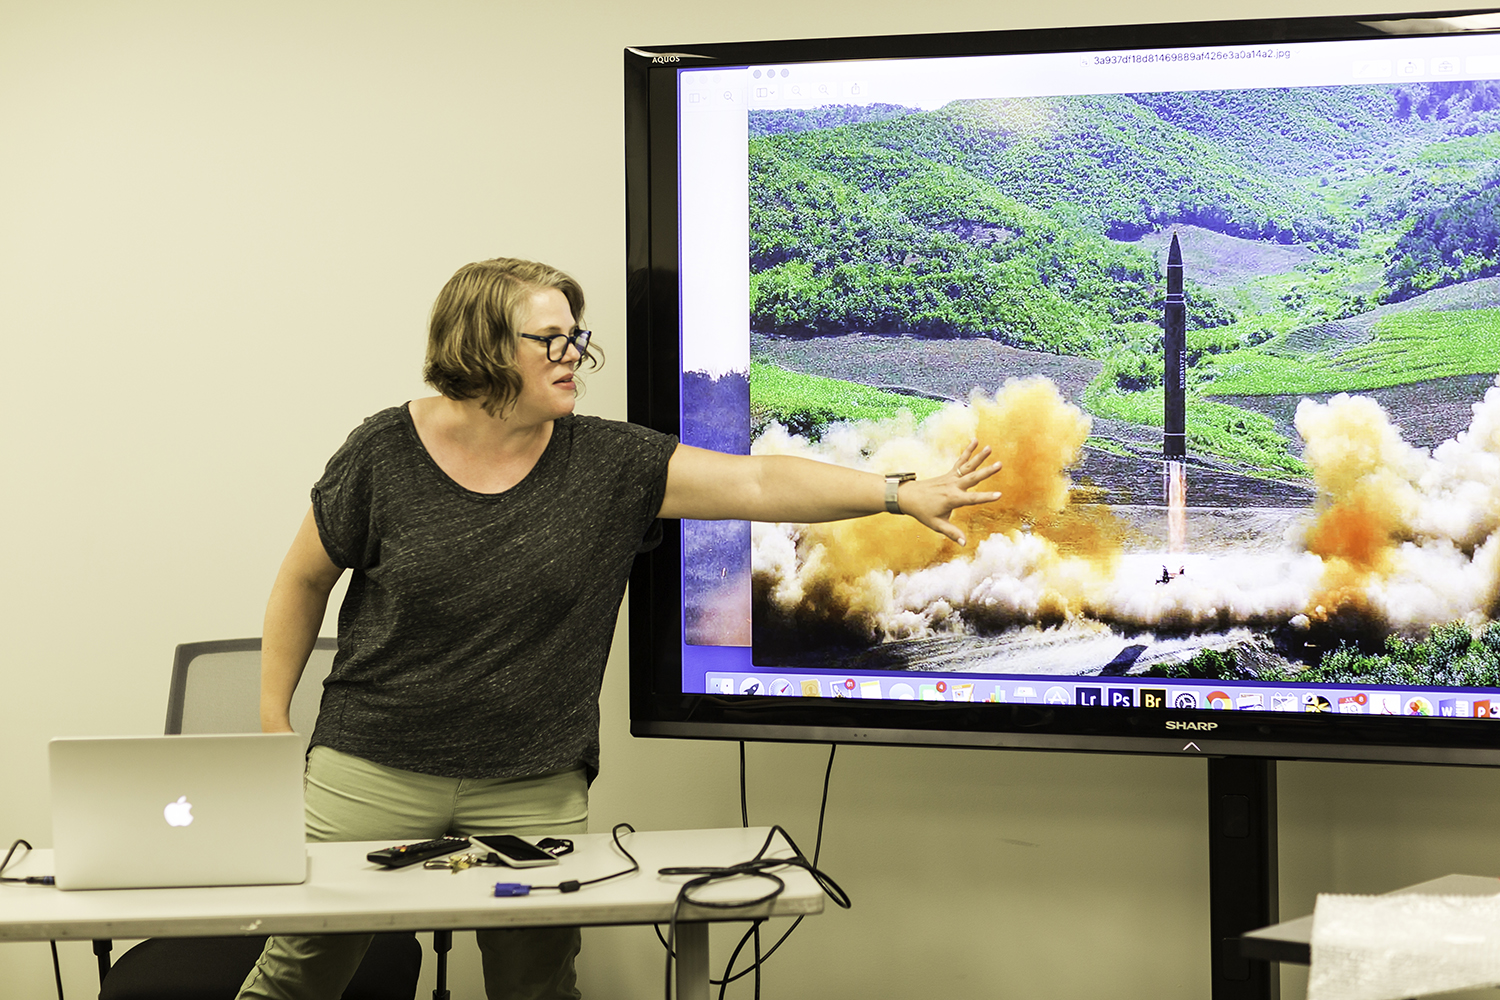 Women presents an image of a rocket